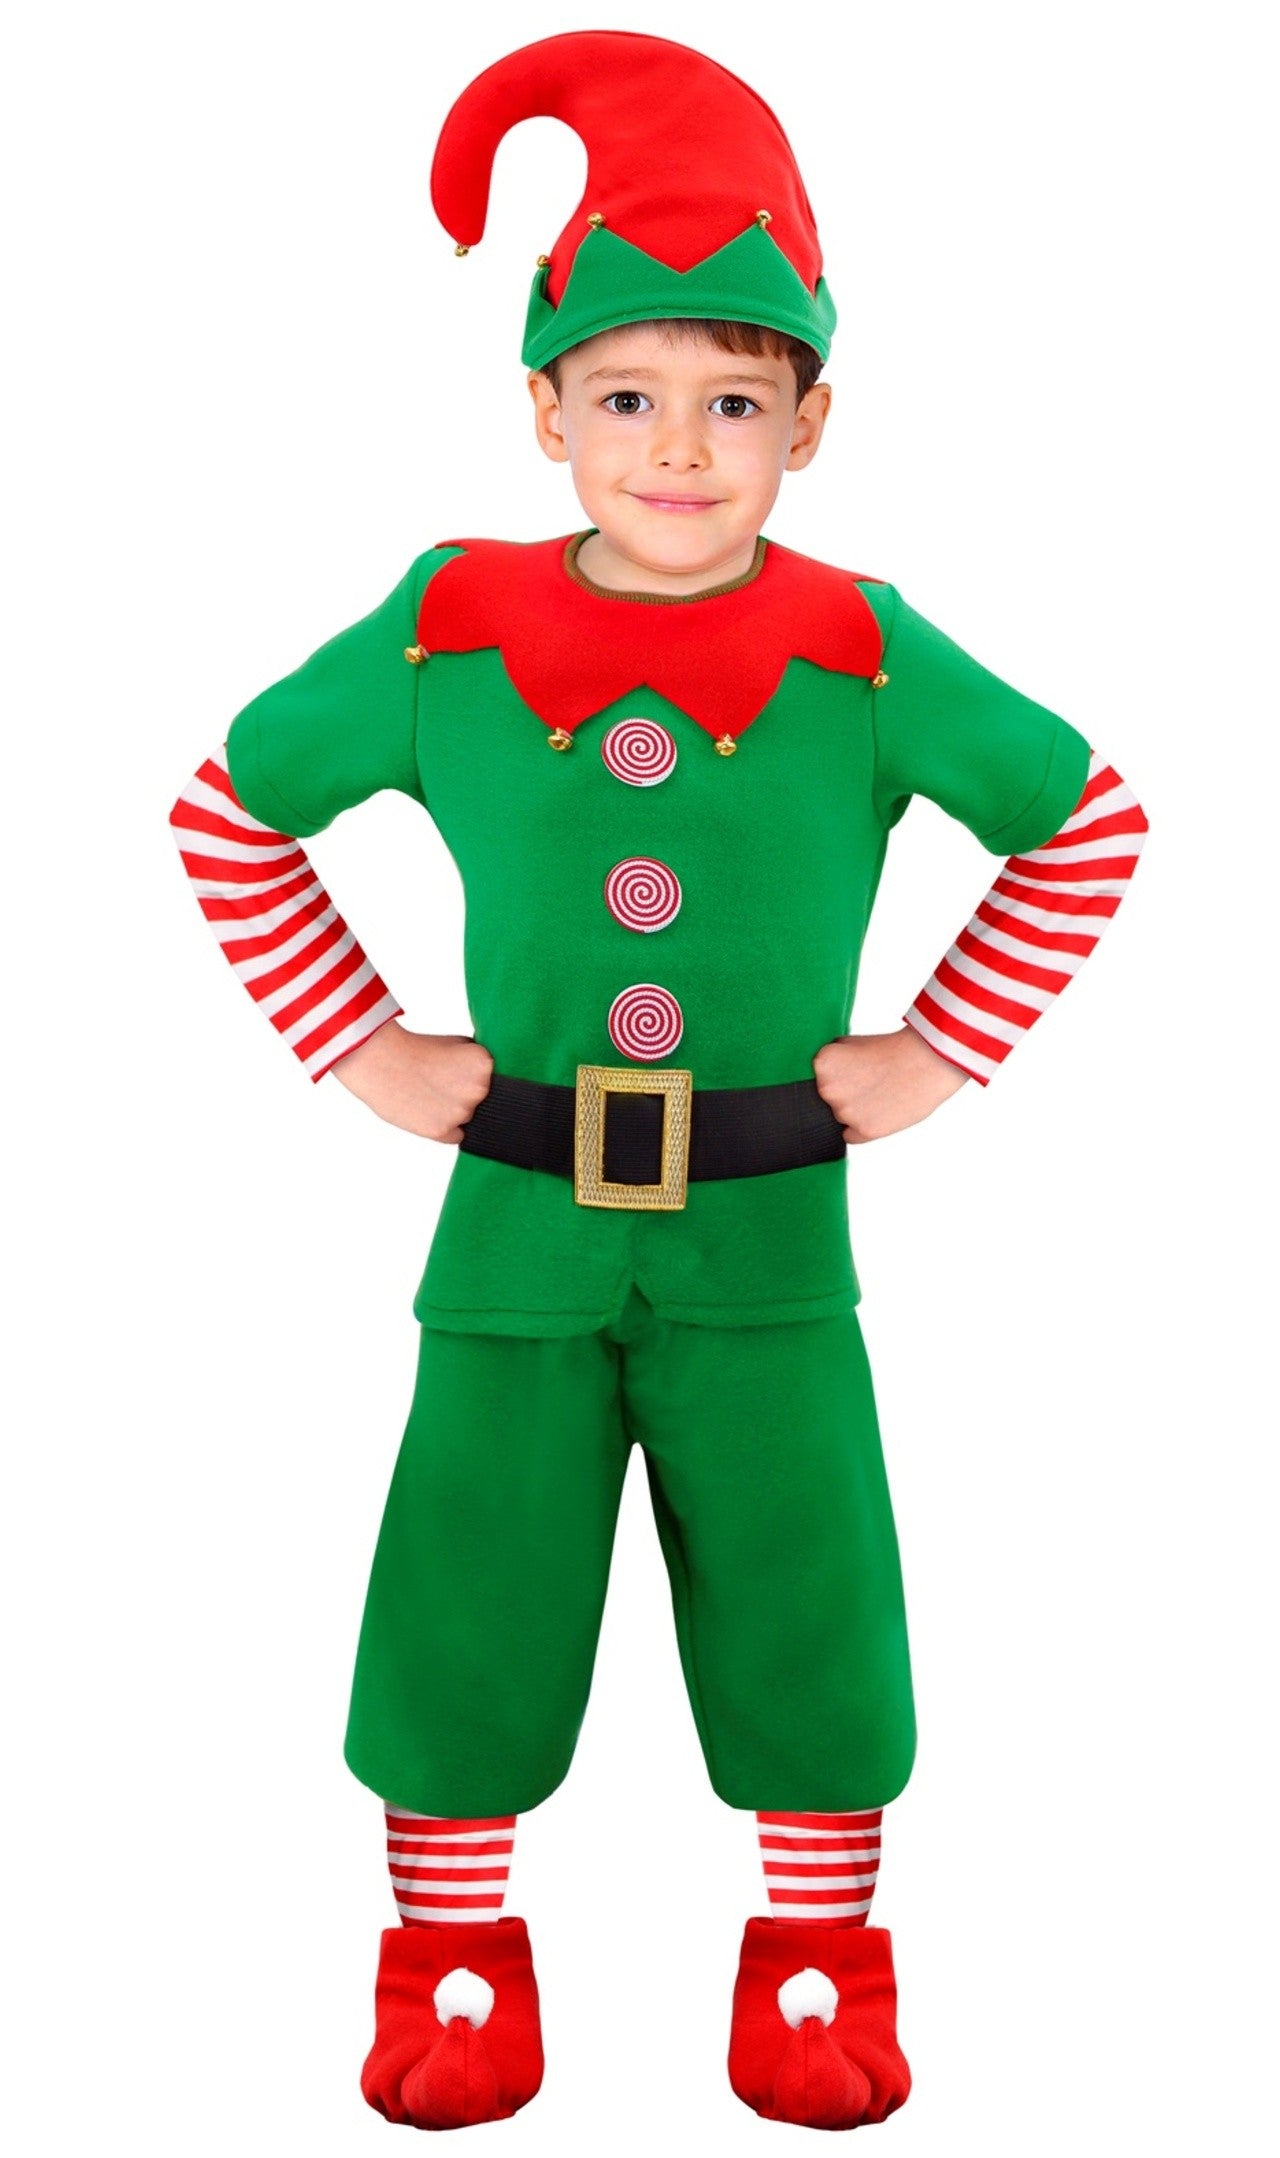 Acquista online costume da elfo folletto infantile